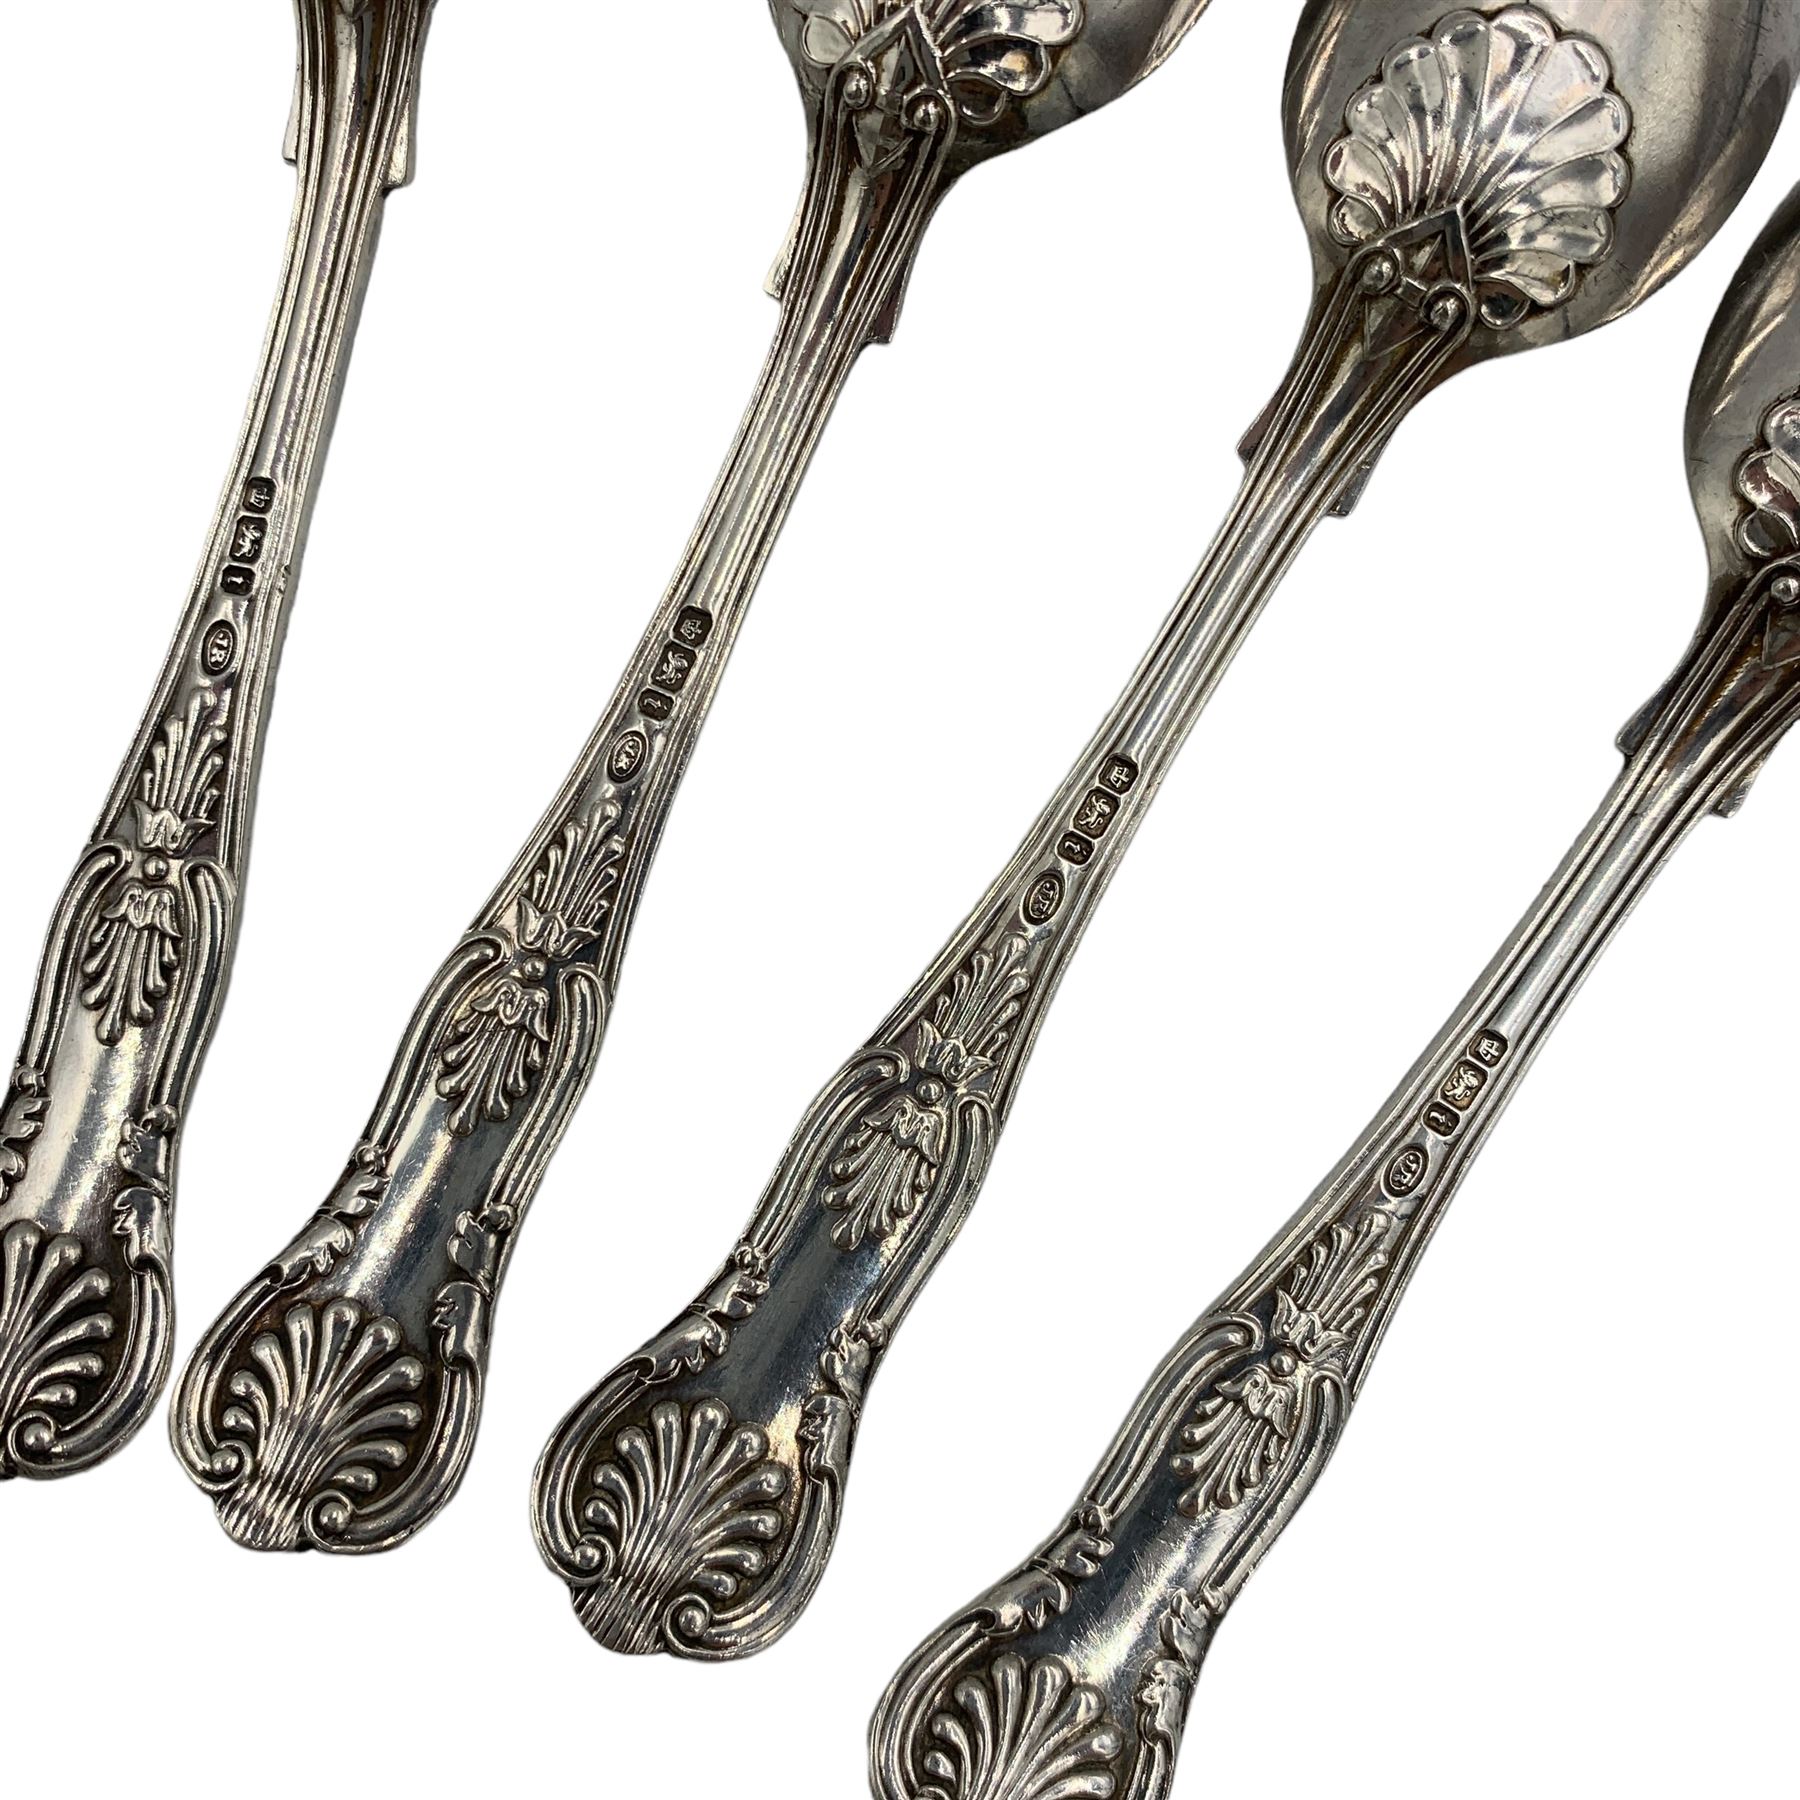 Set of twelve Edwardian silver Kings pattern teaspoons engraved with a monogram Sheffield 1901 Maker - Image 2 of 3